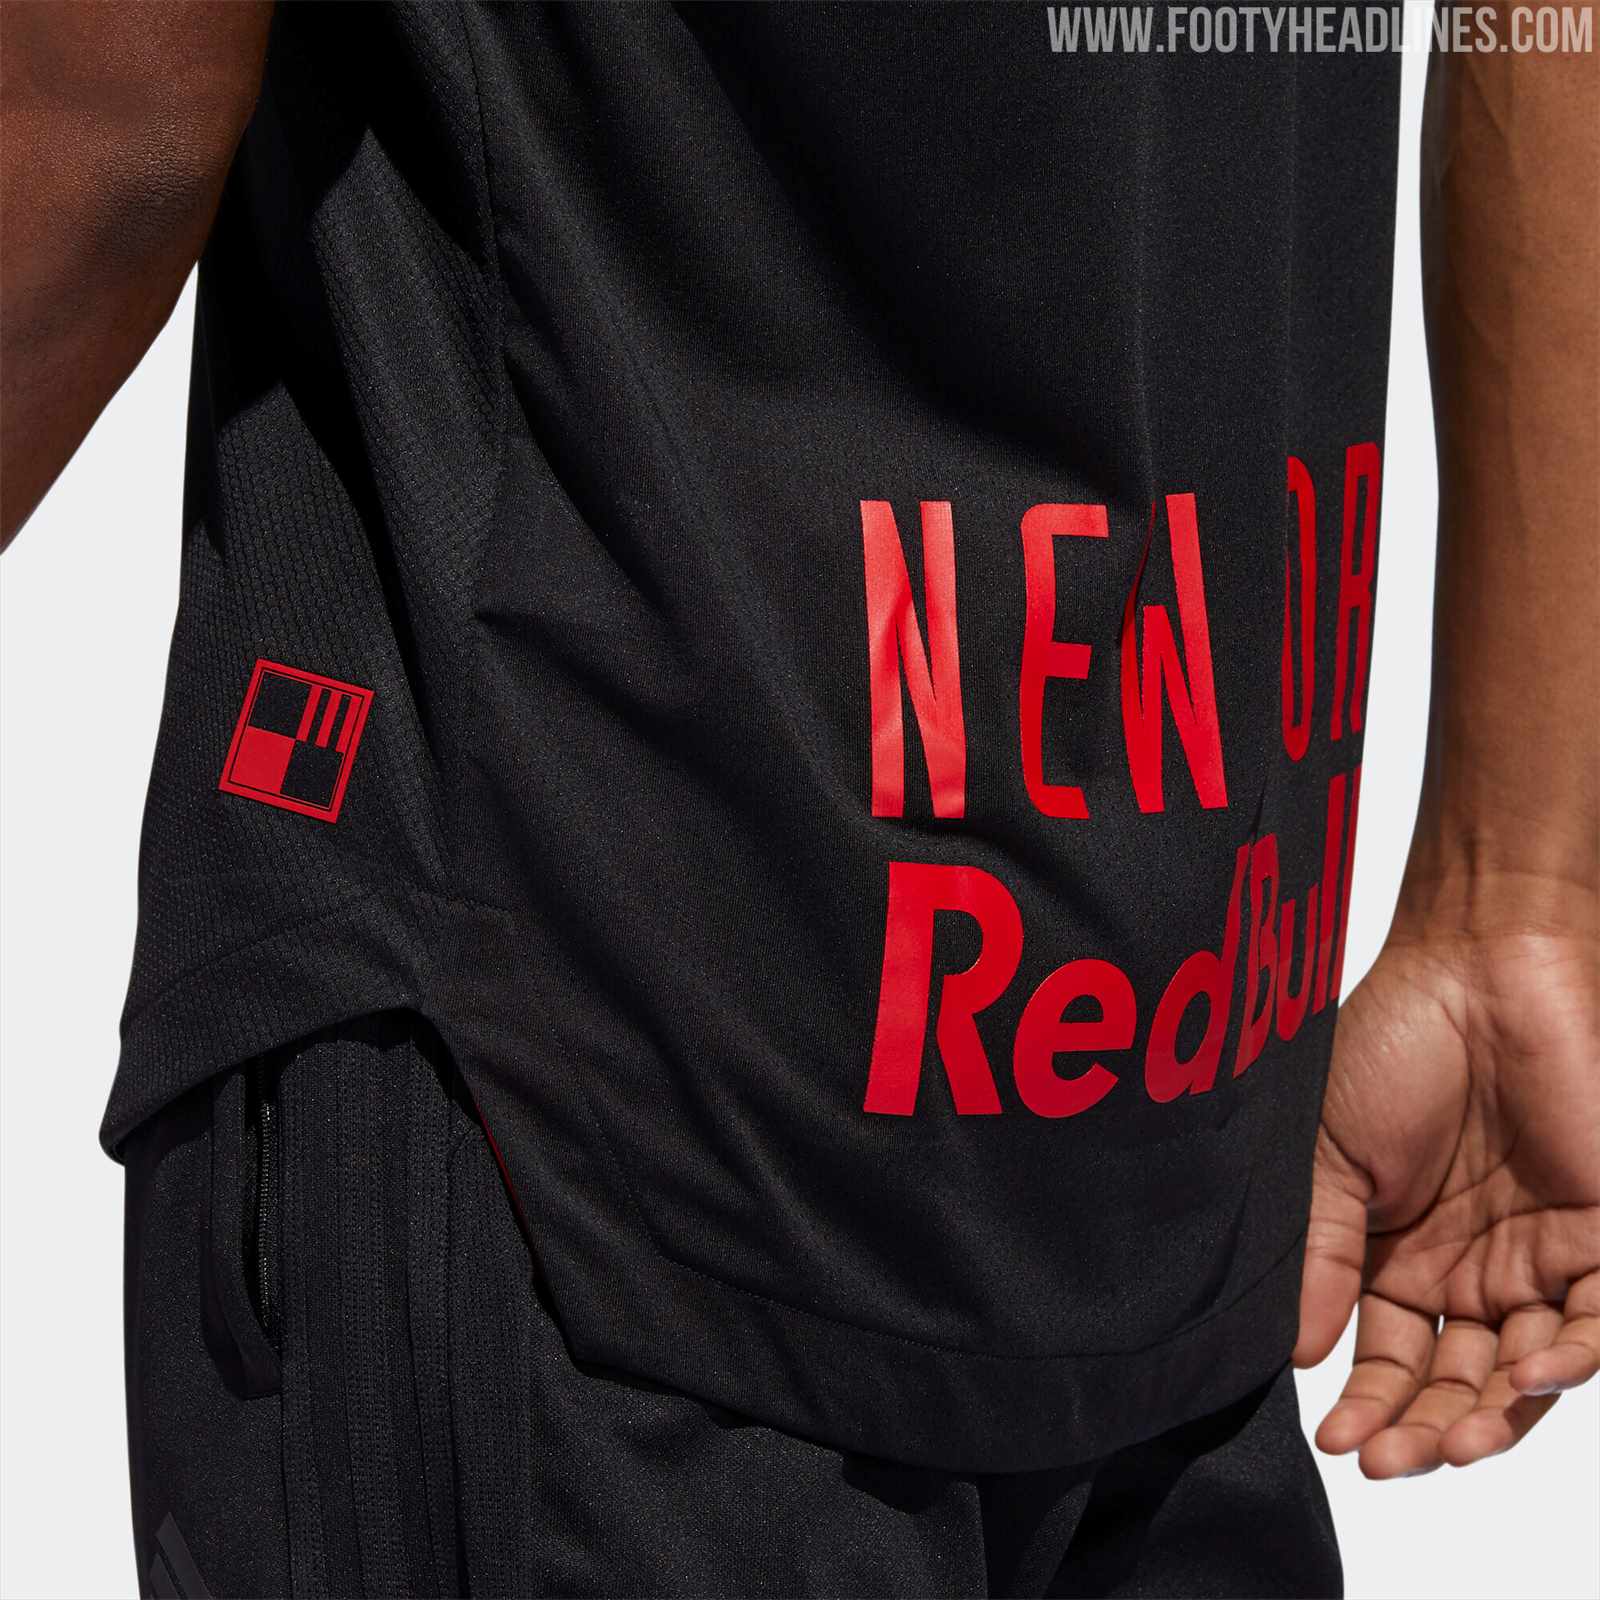 New York Red Bulls 2020 Away Kit Released - Footy Headlines